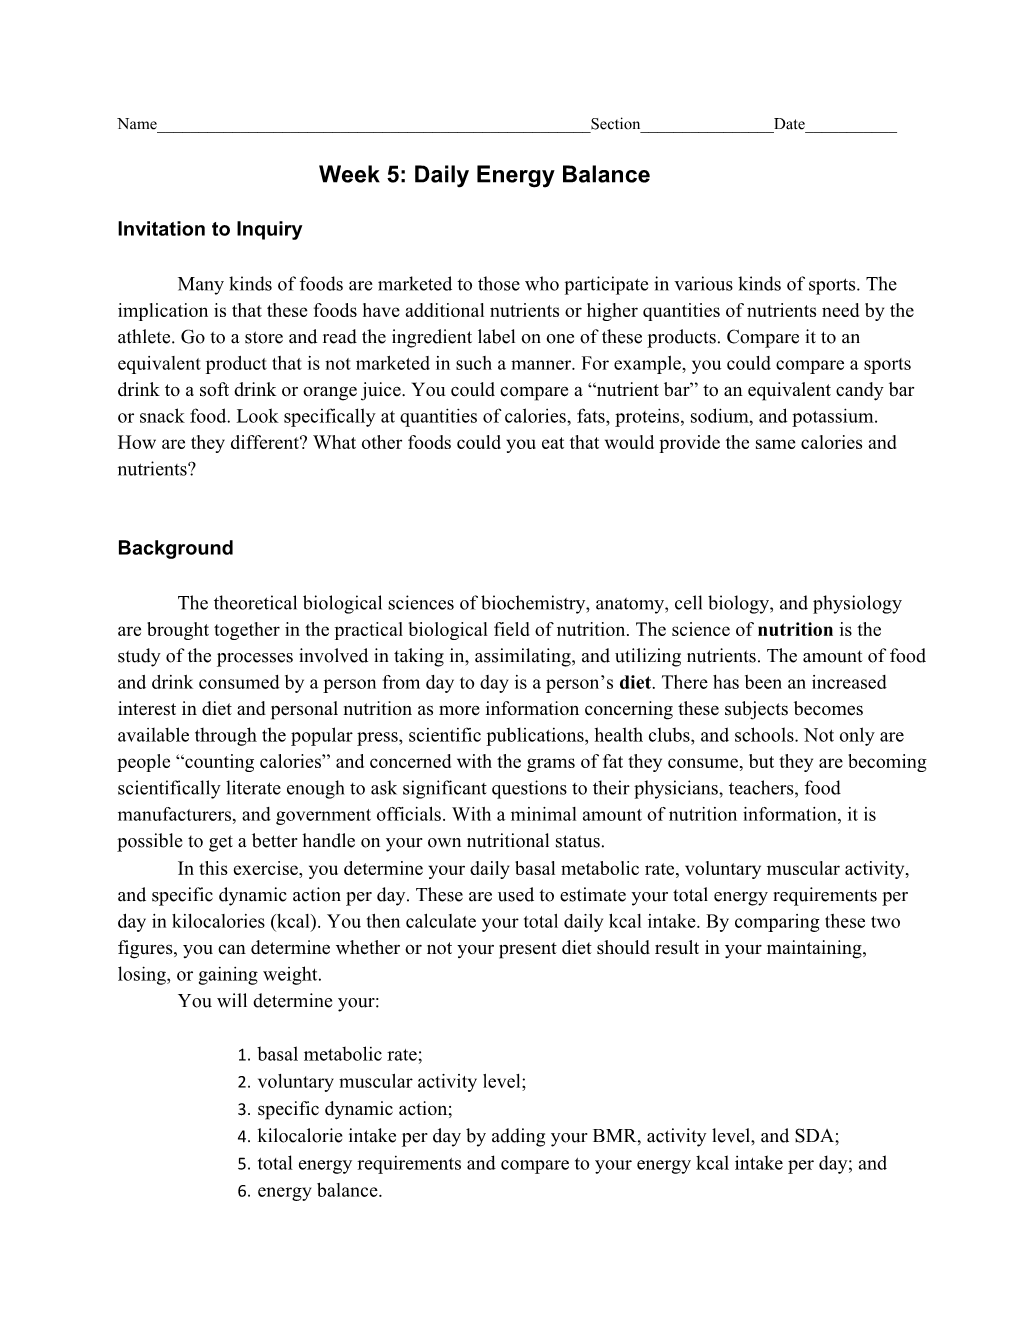 Week 5: Daily Energy Balance